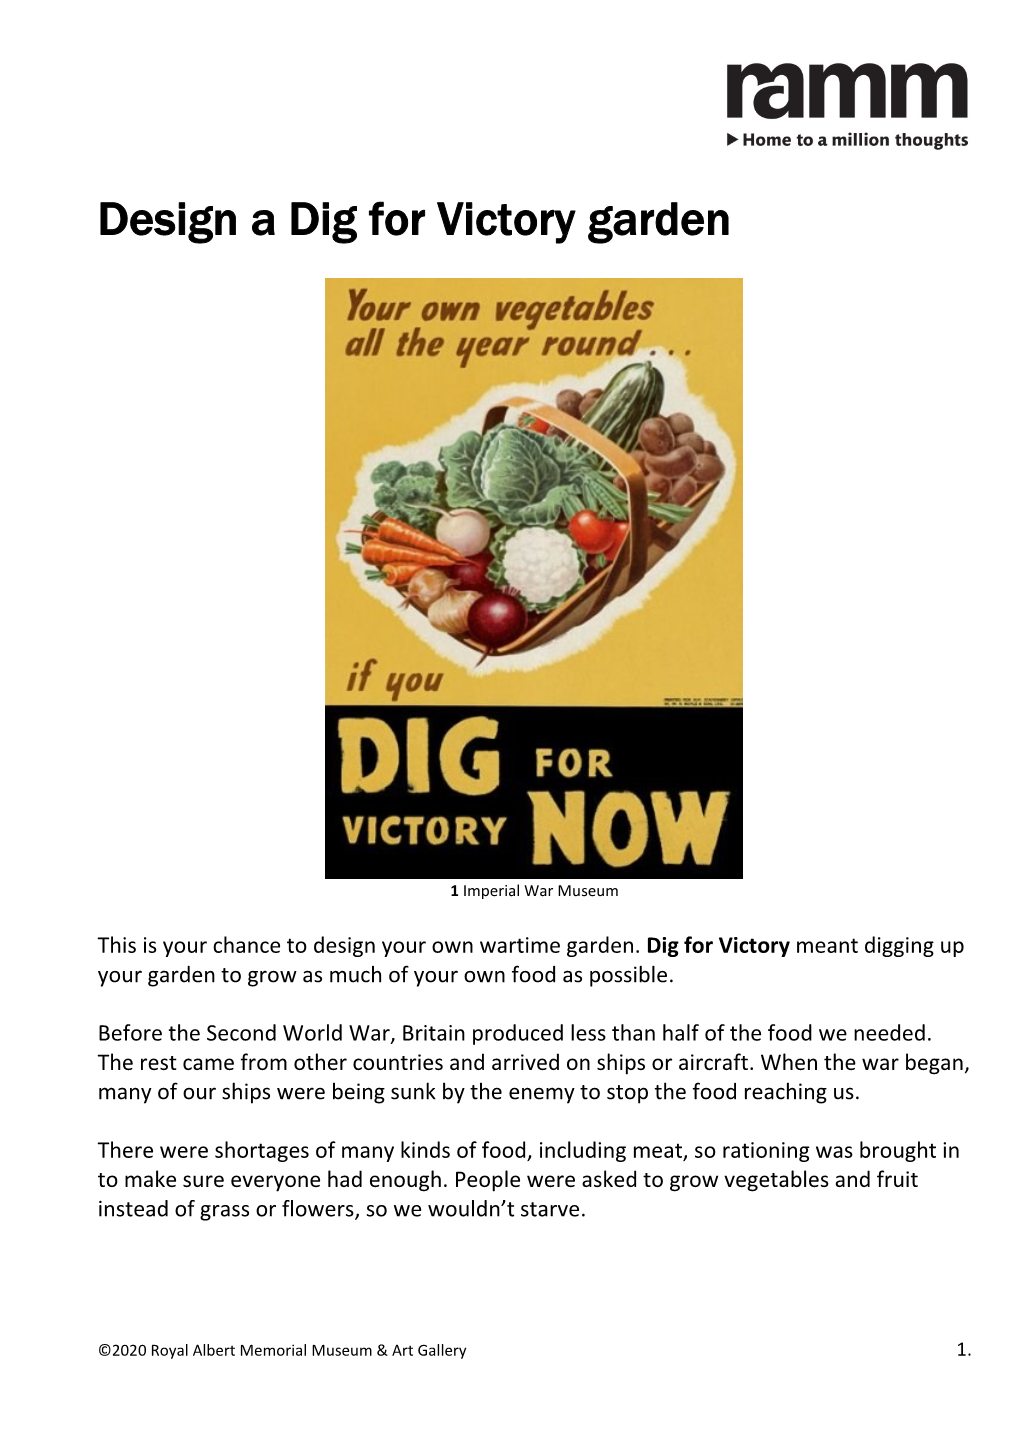 Design a Dig for Victory Garden